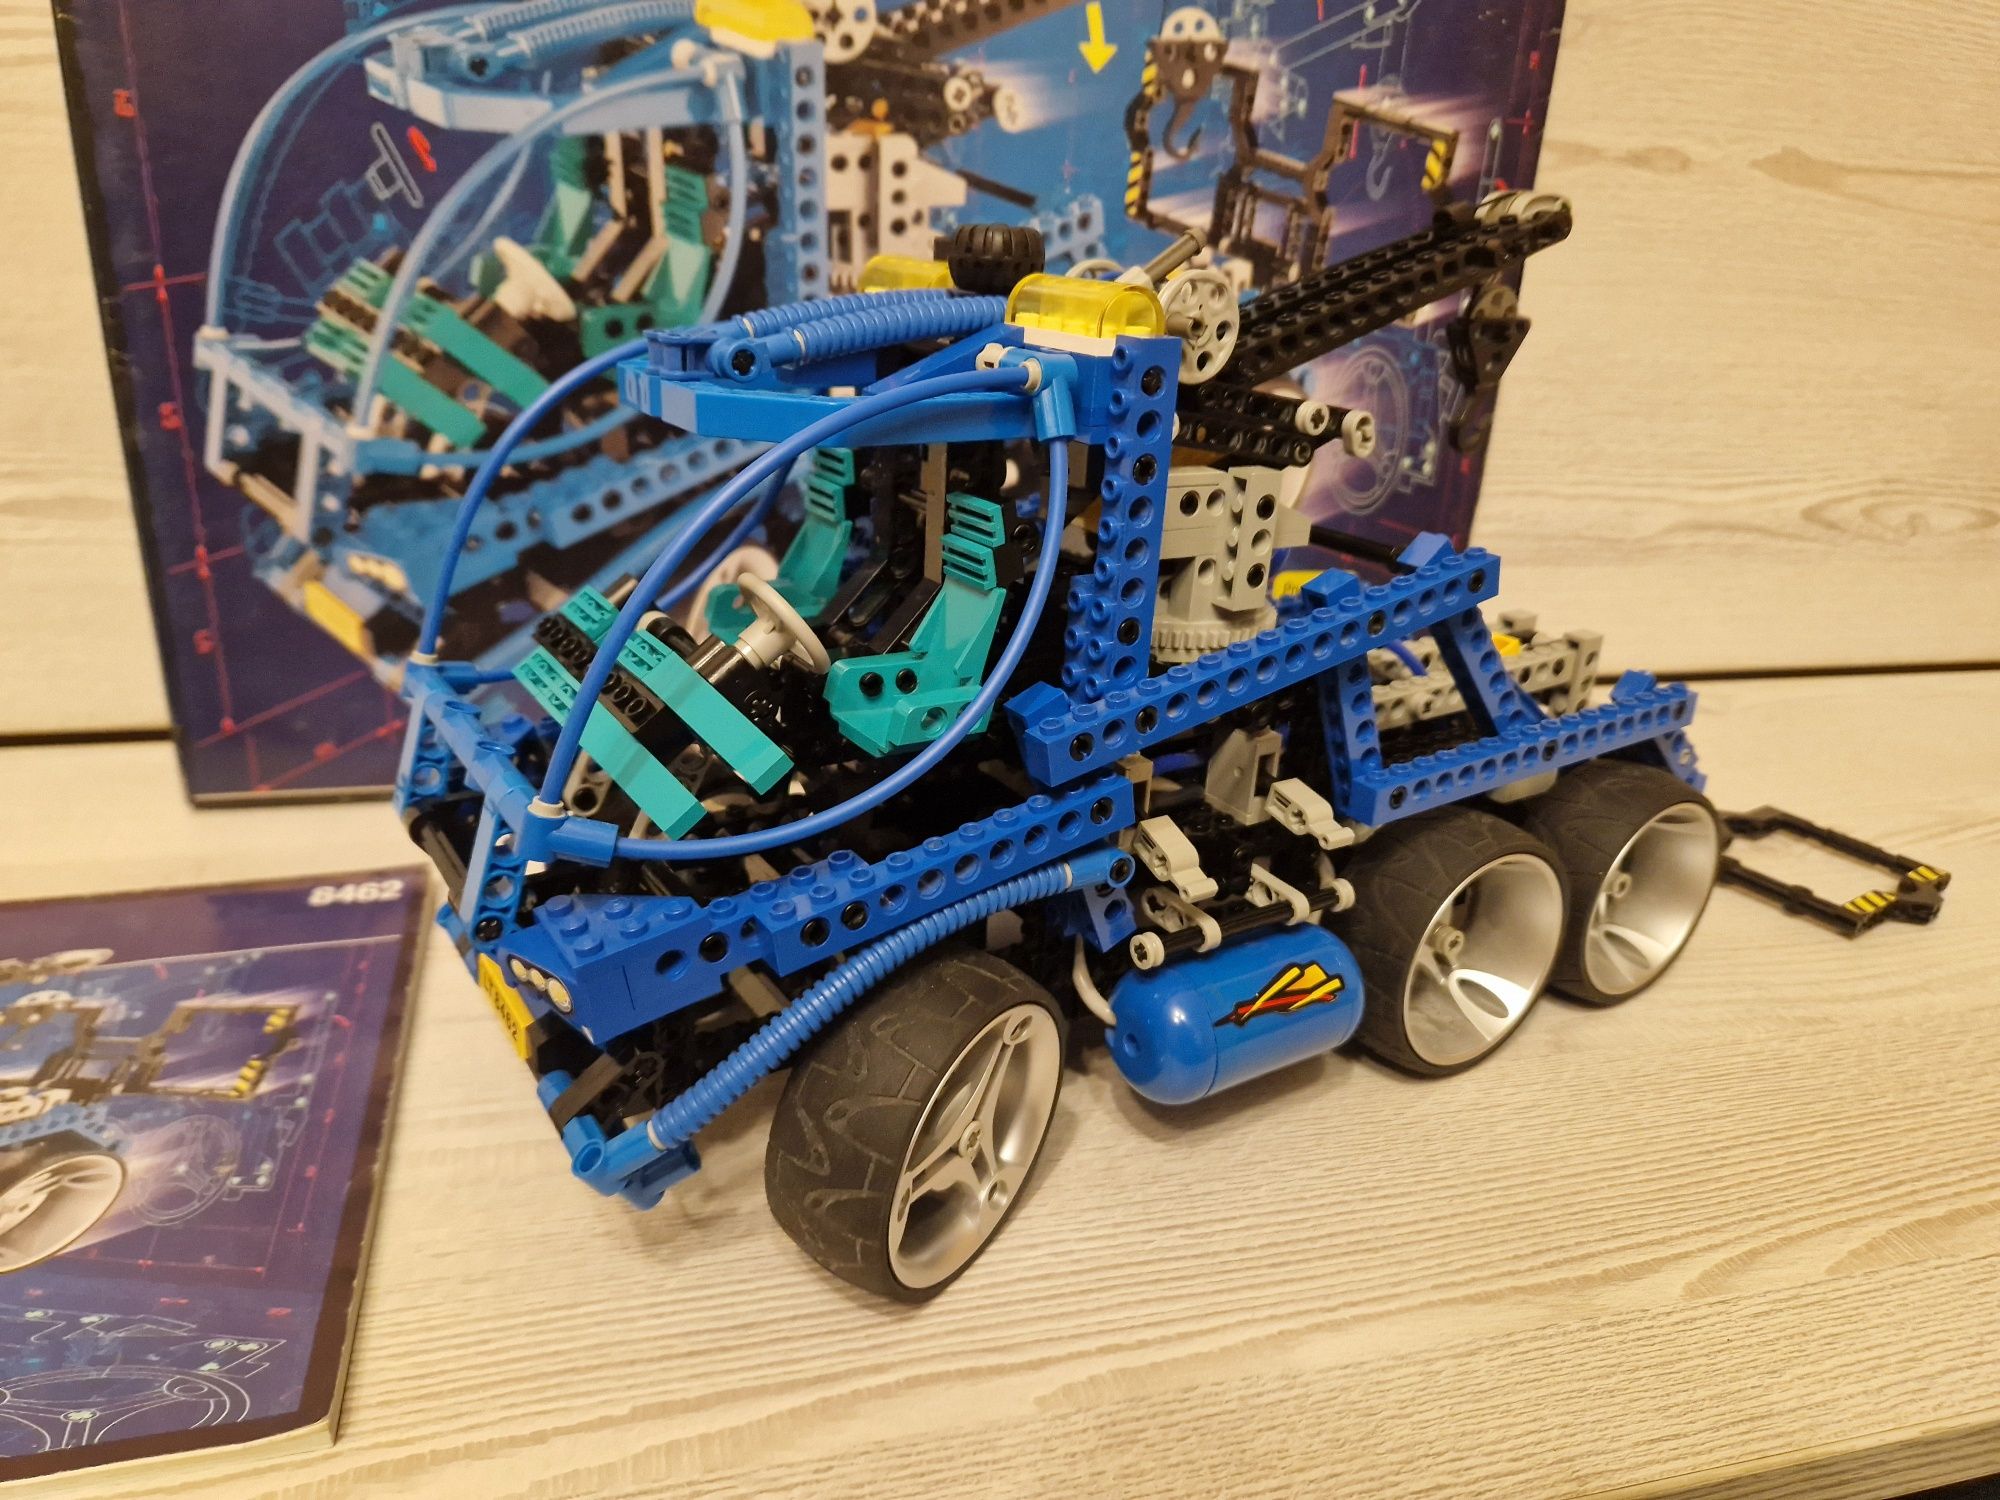 Lego 8462 technic.